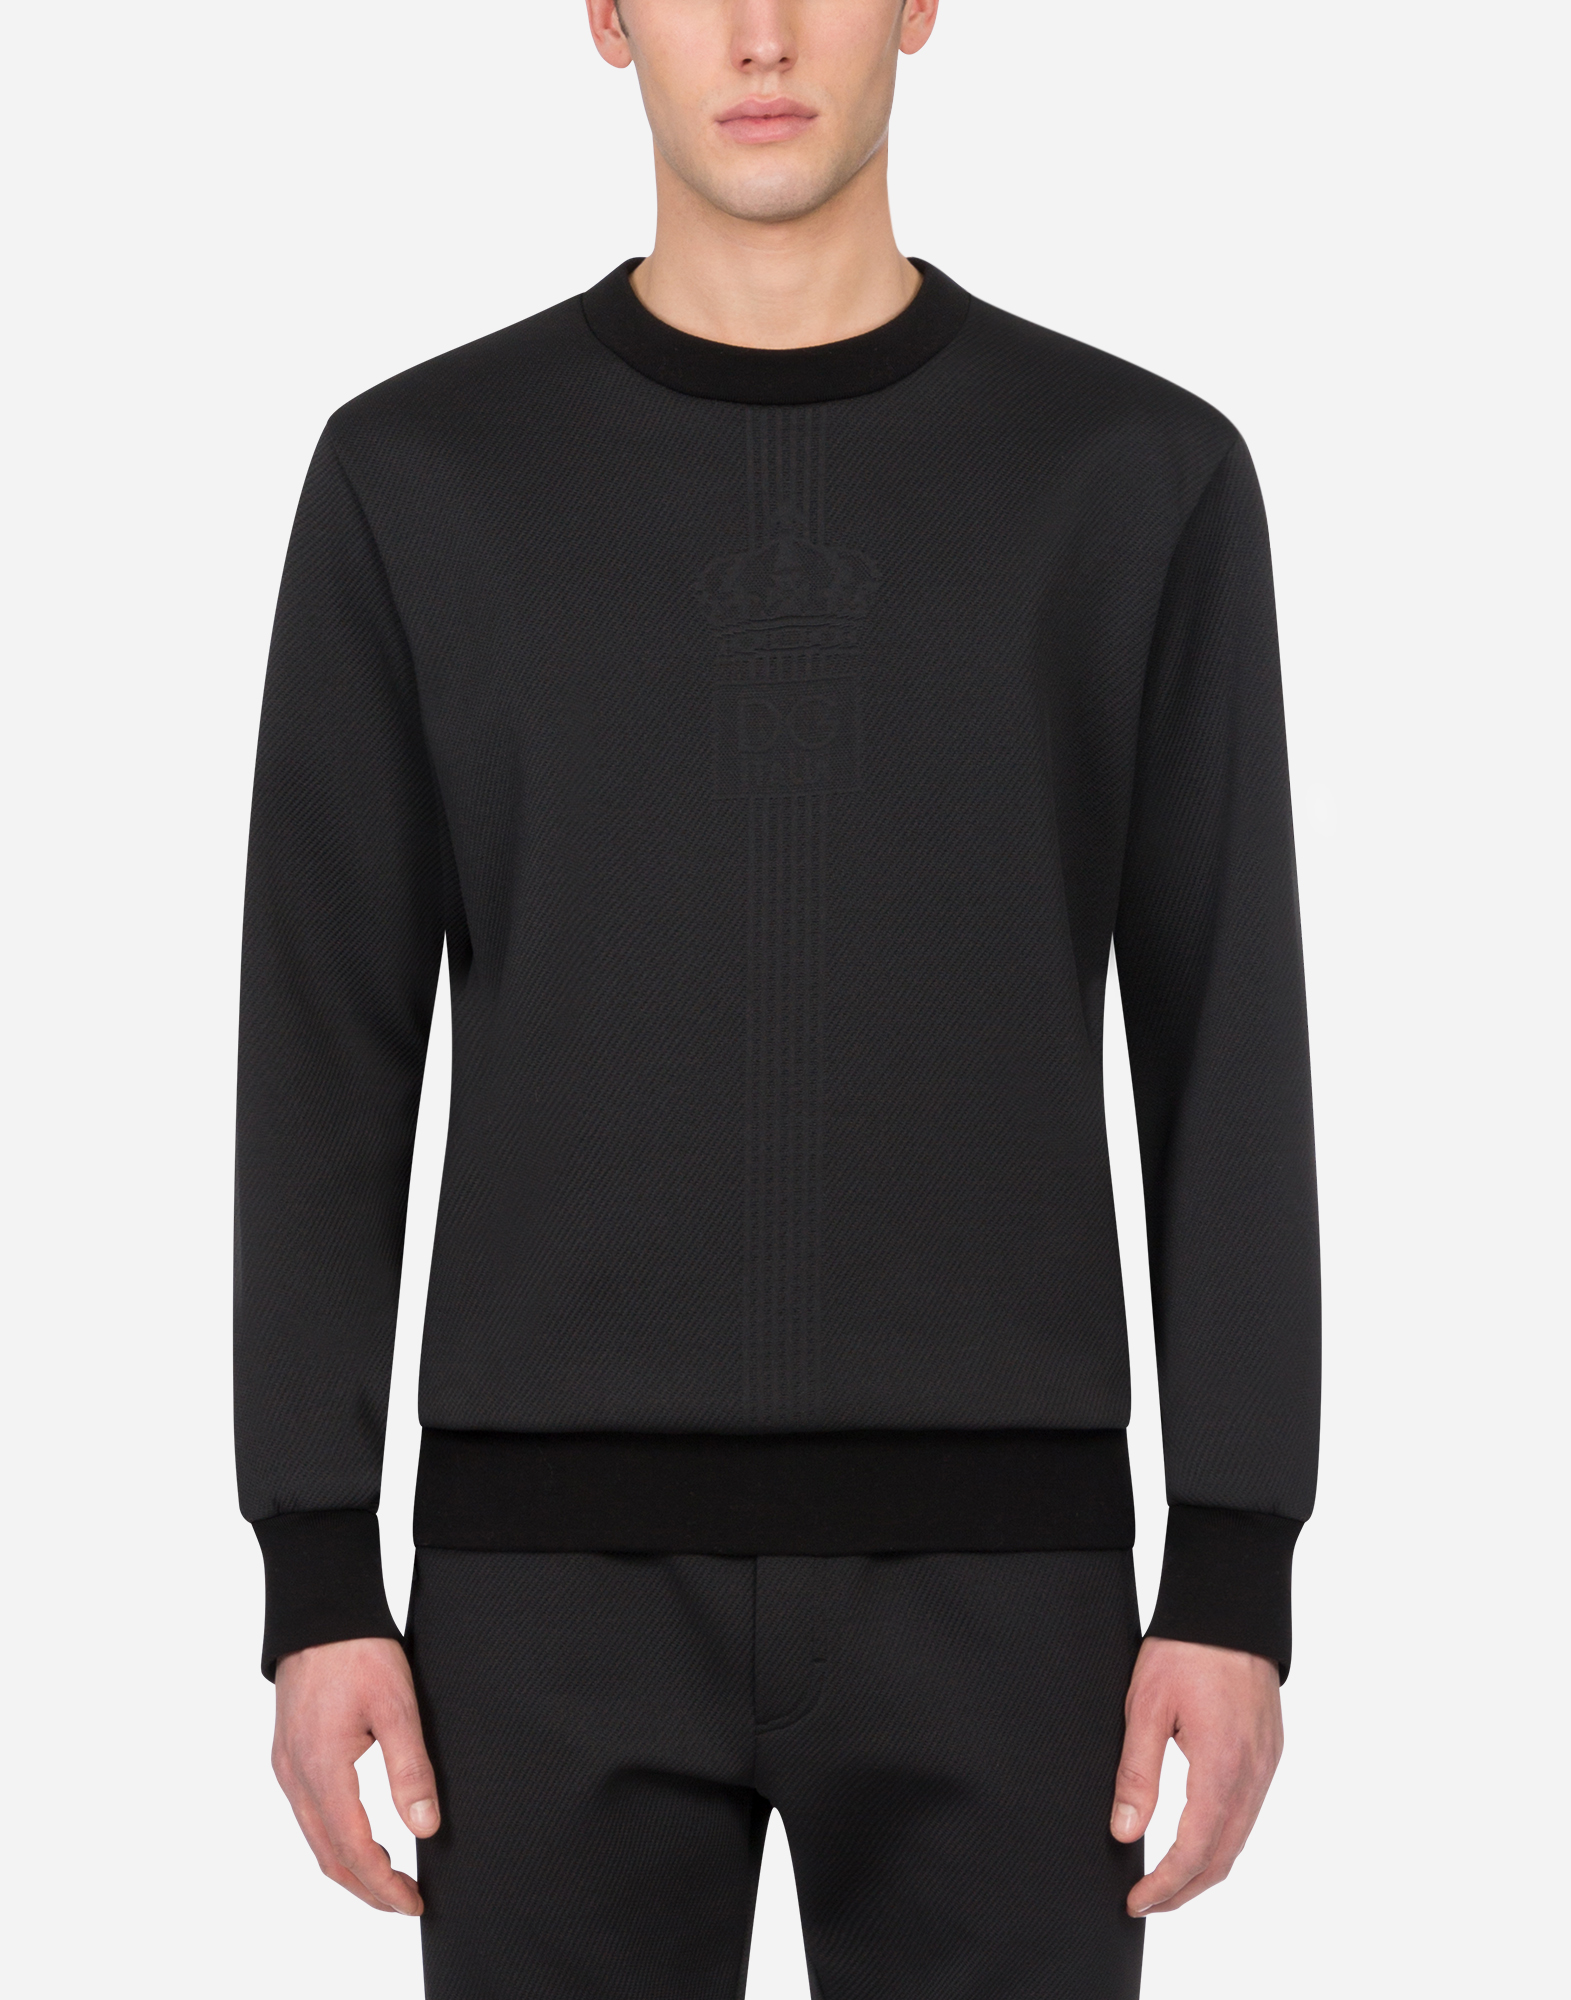 Jacquard sweatshirt with DG logo in Black